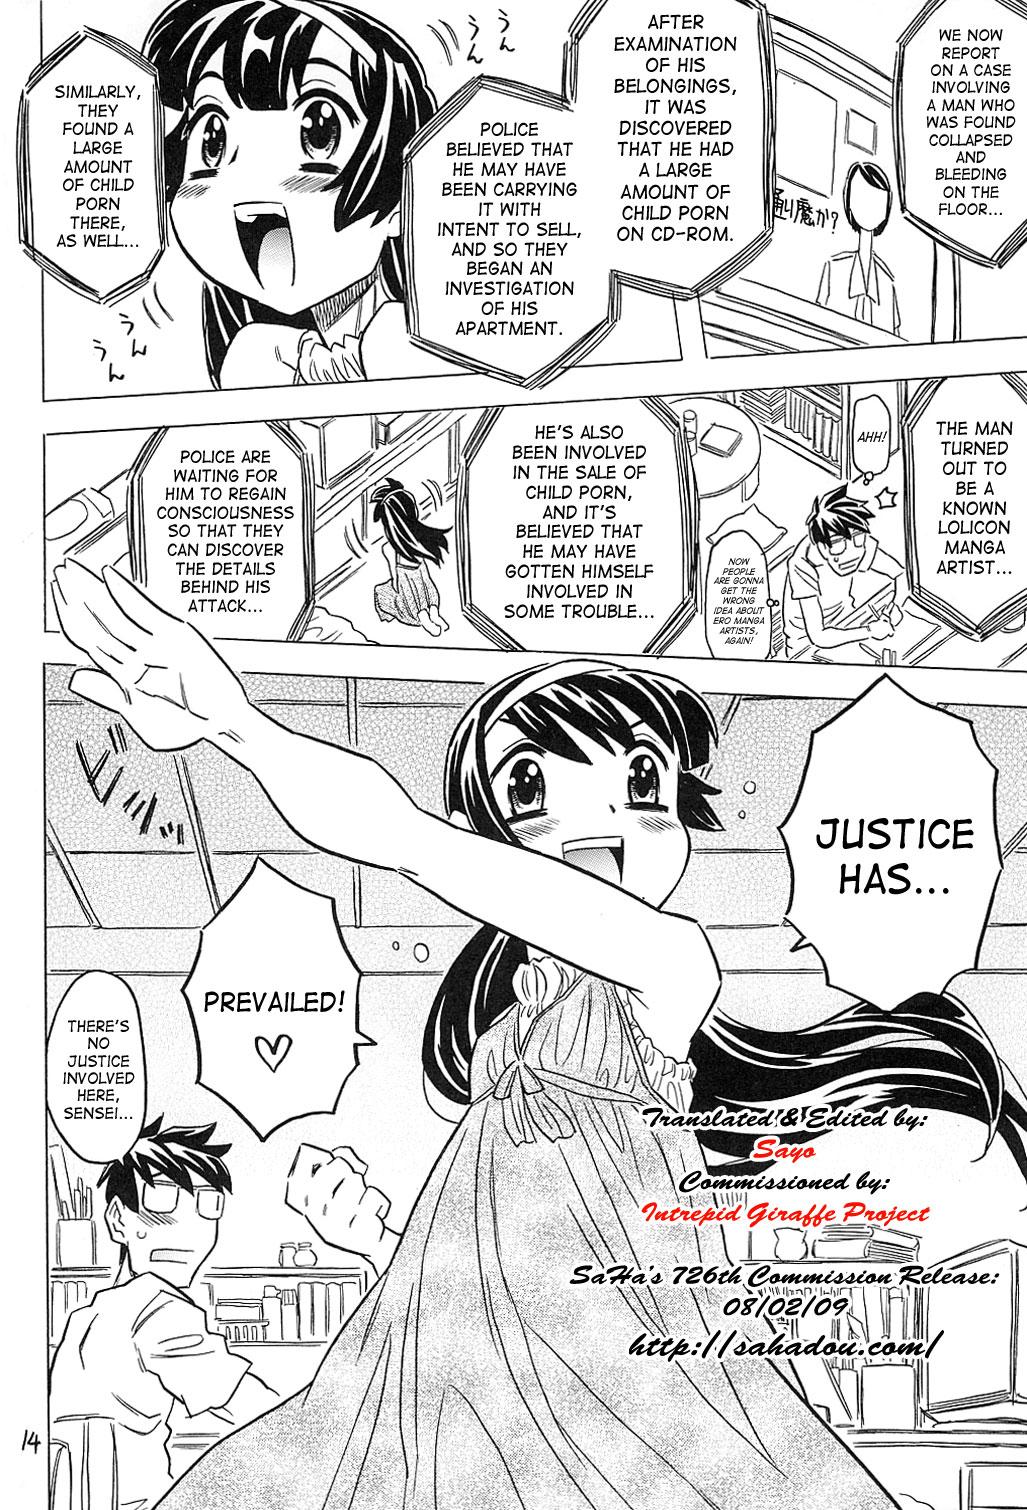 Female Ero Manga Artist Scorned 12